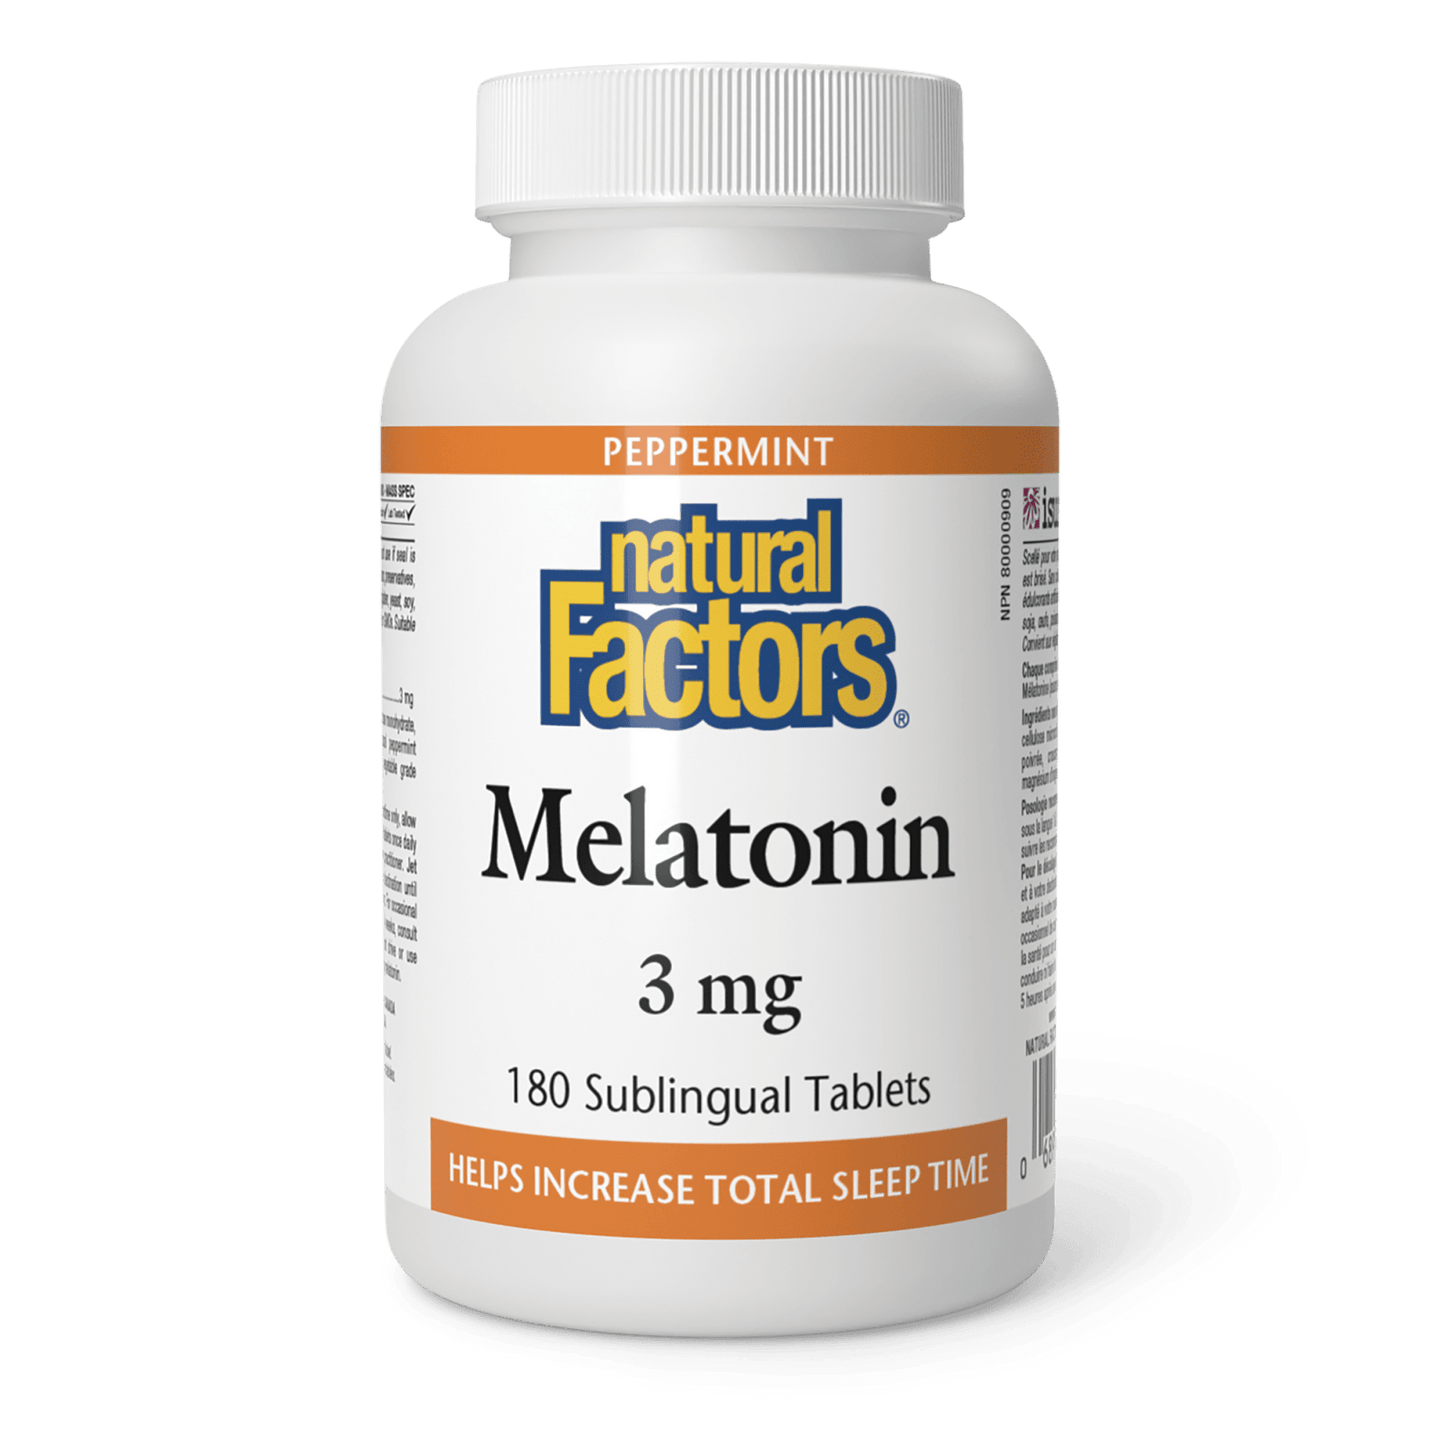 Melatonin 3 mg, Peppermint, Natural Factors|v|image|2716